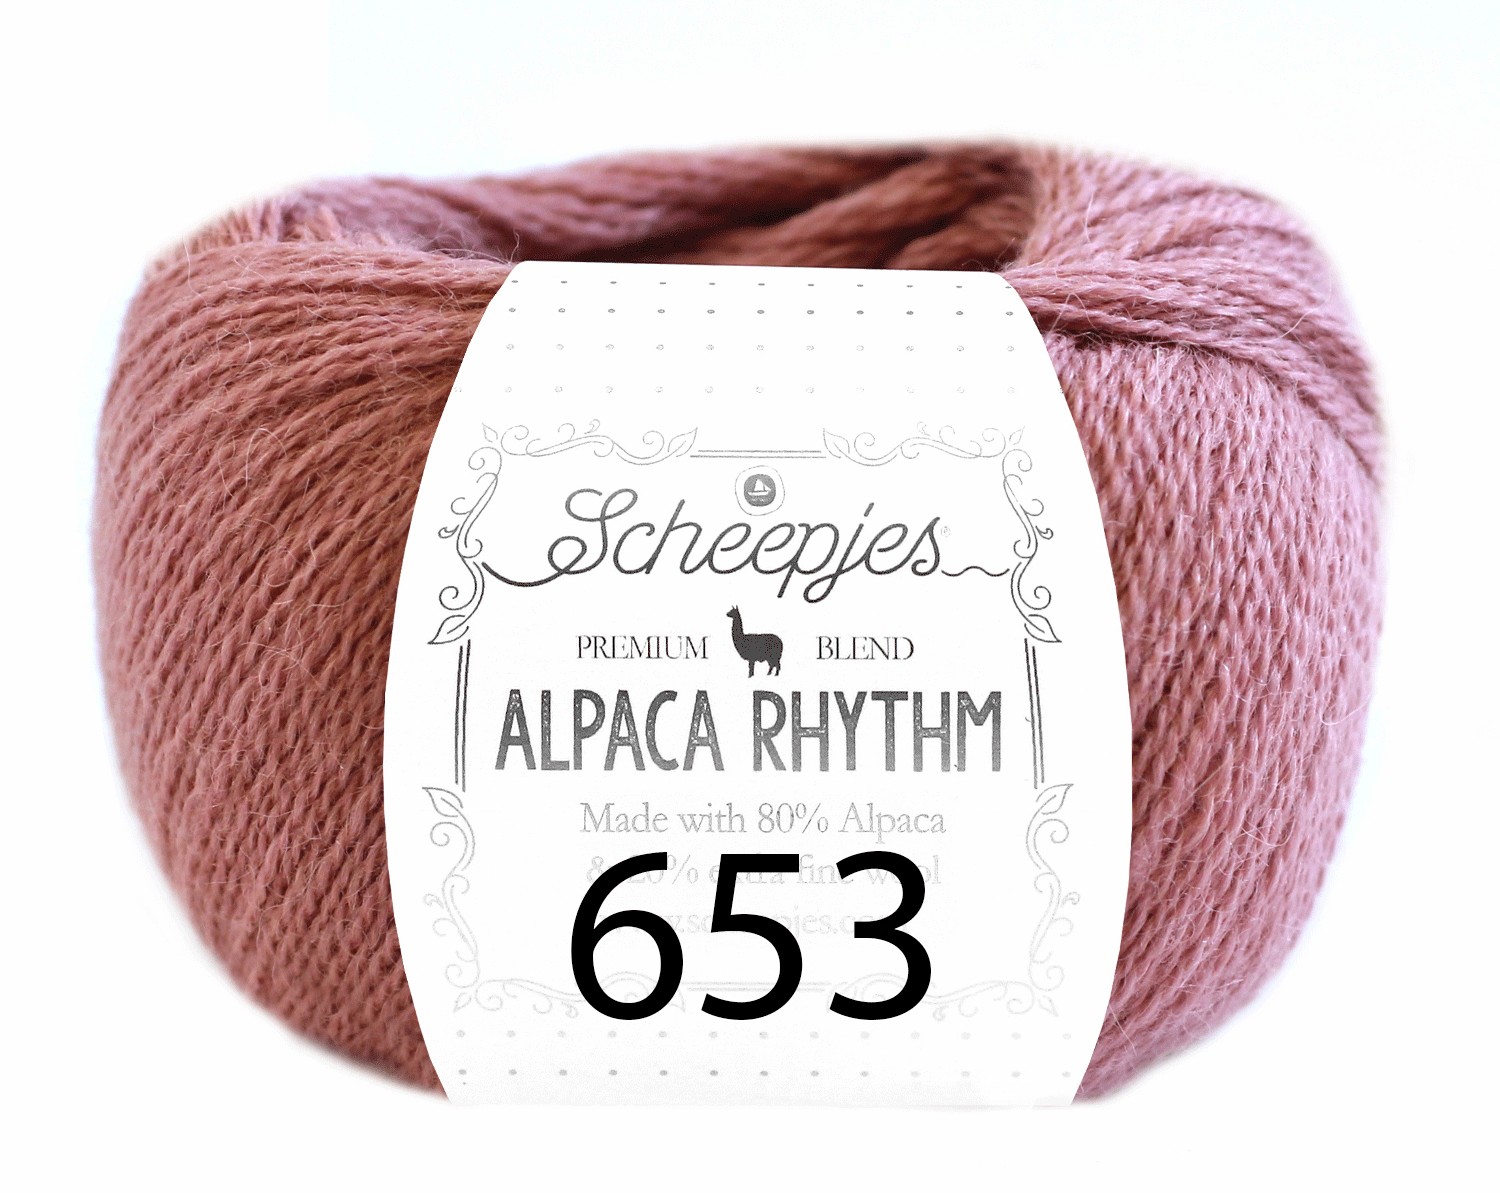 Scheepjes- Alpaca Rhythm 653 Foxtrot